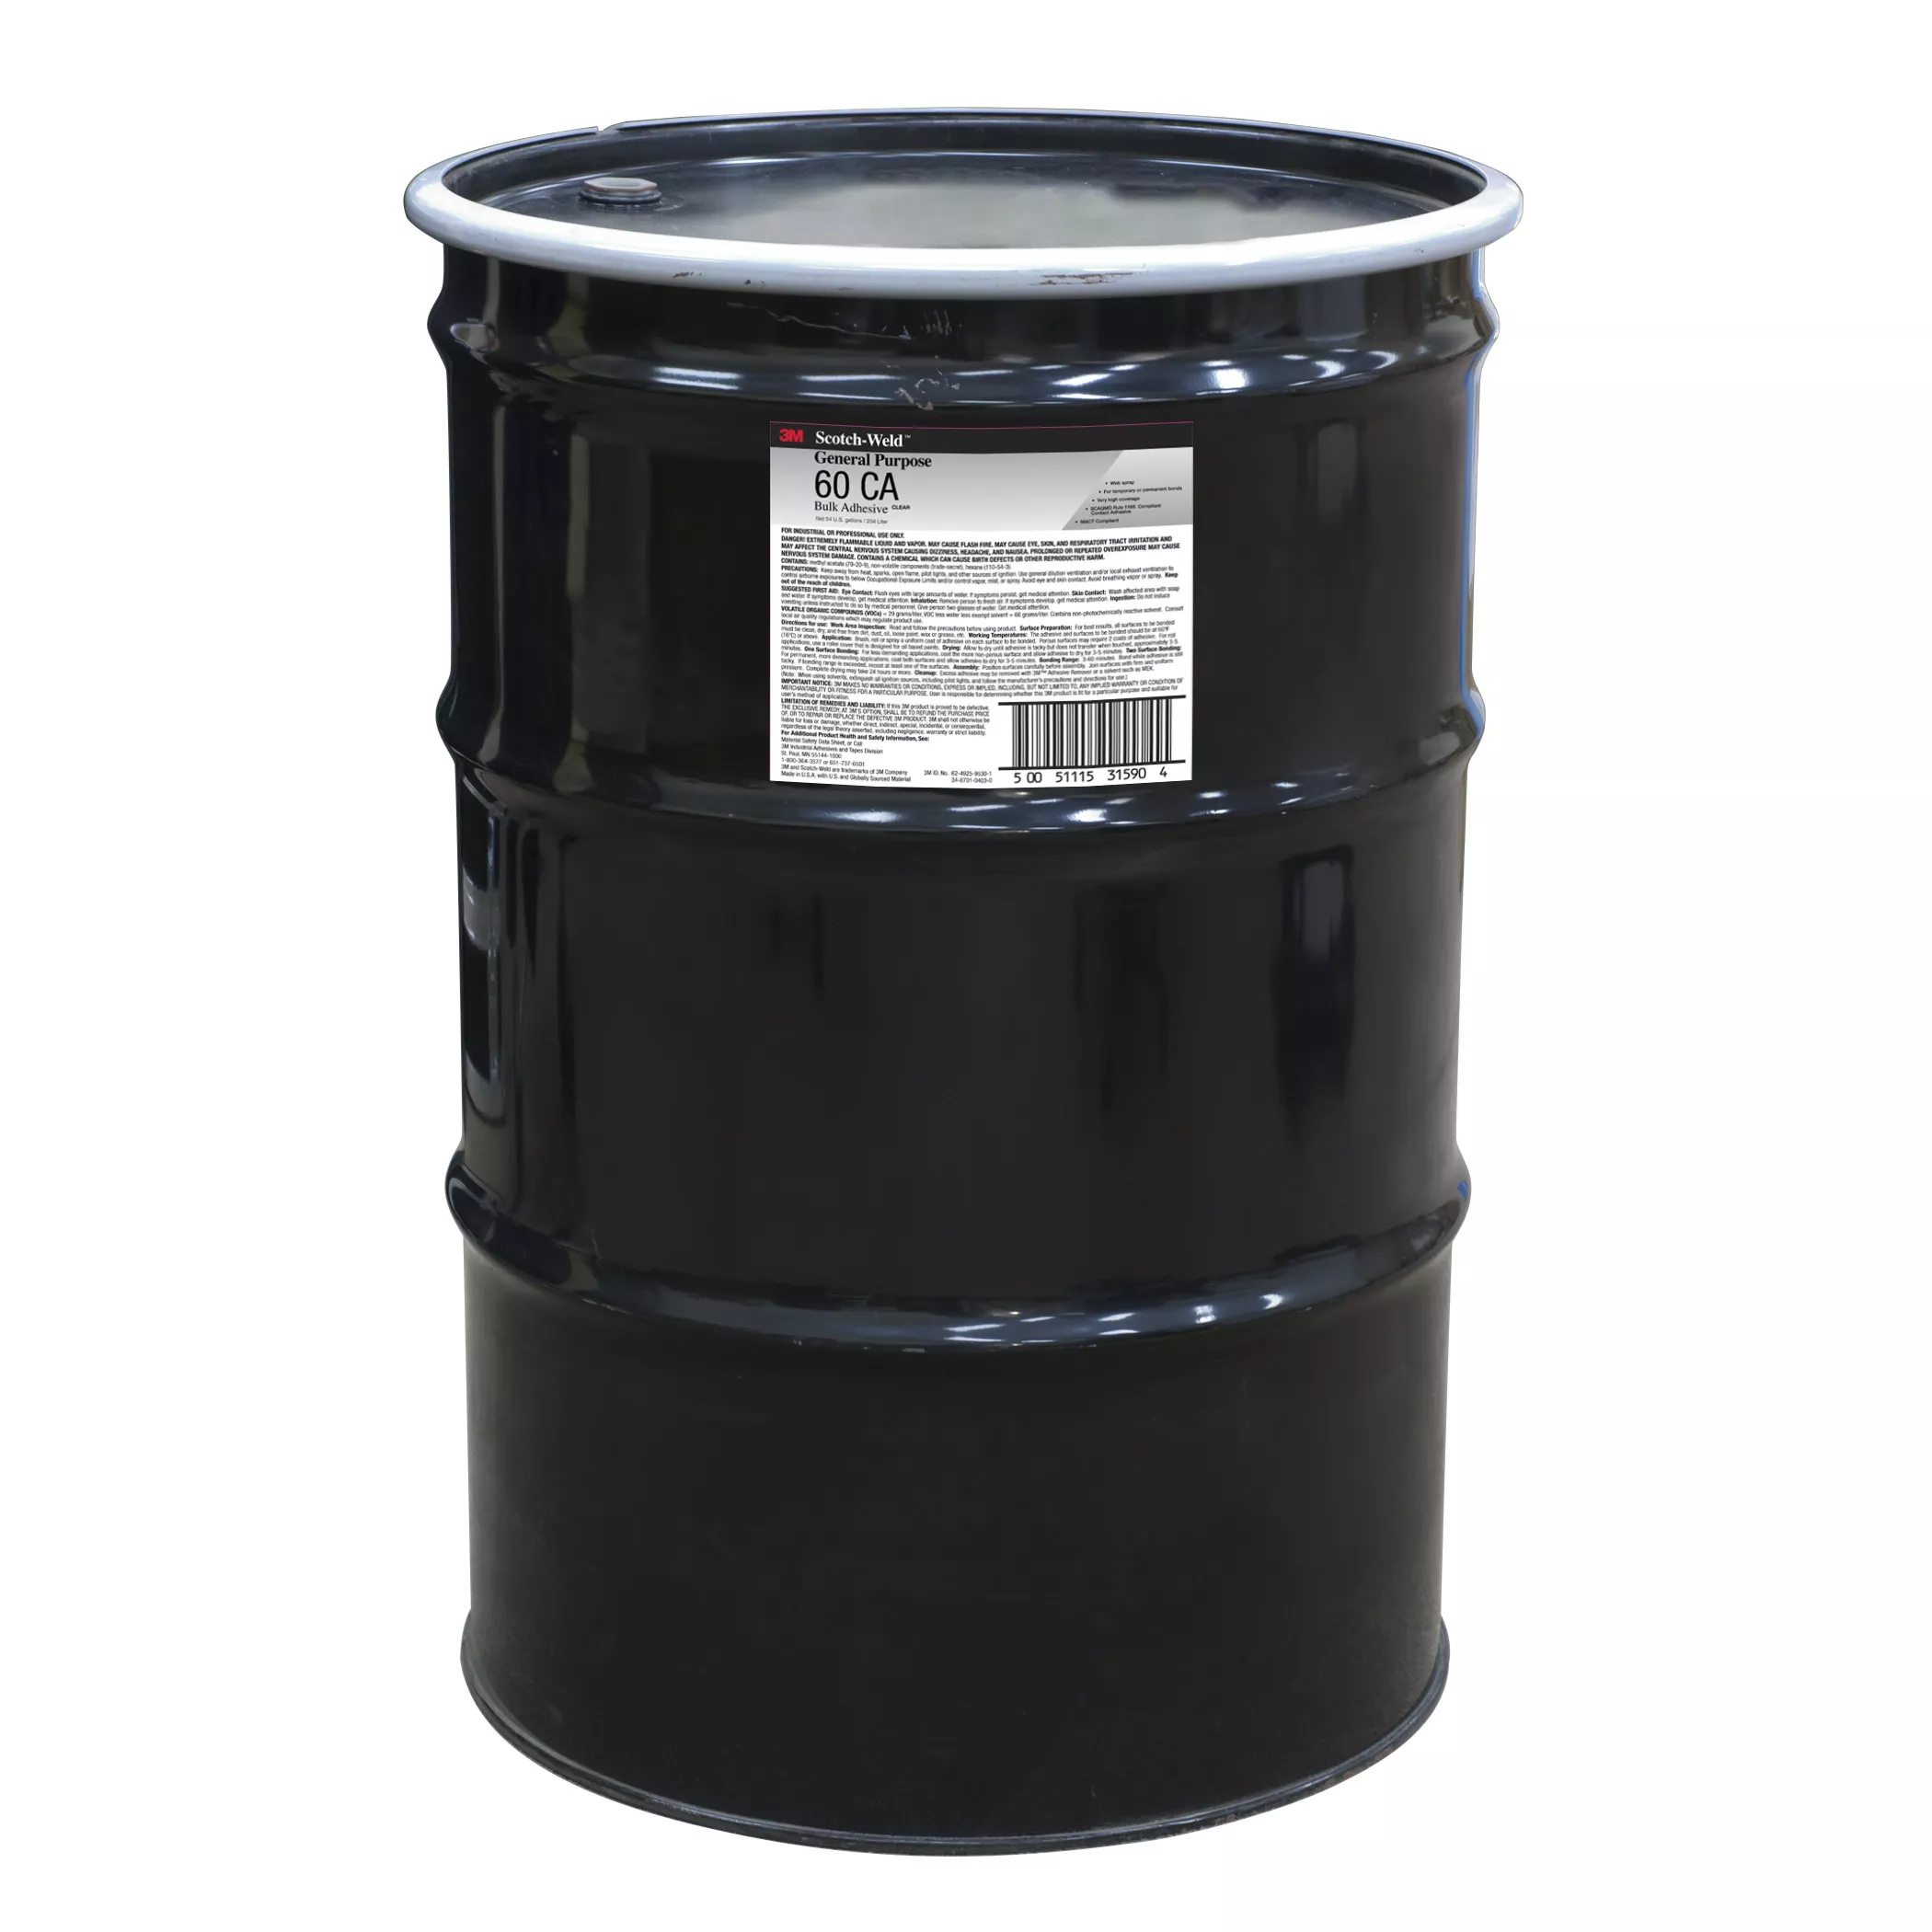 3M™ General Purpose 60, CA Adhesive, Clear, 55 Gallon (54 Gallon Net),
Drum